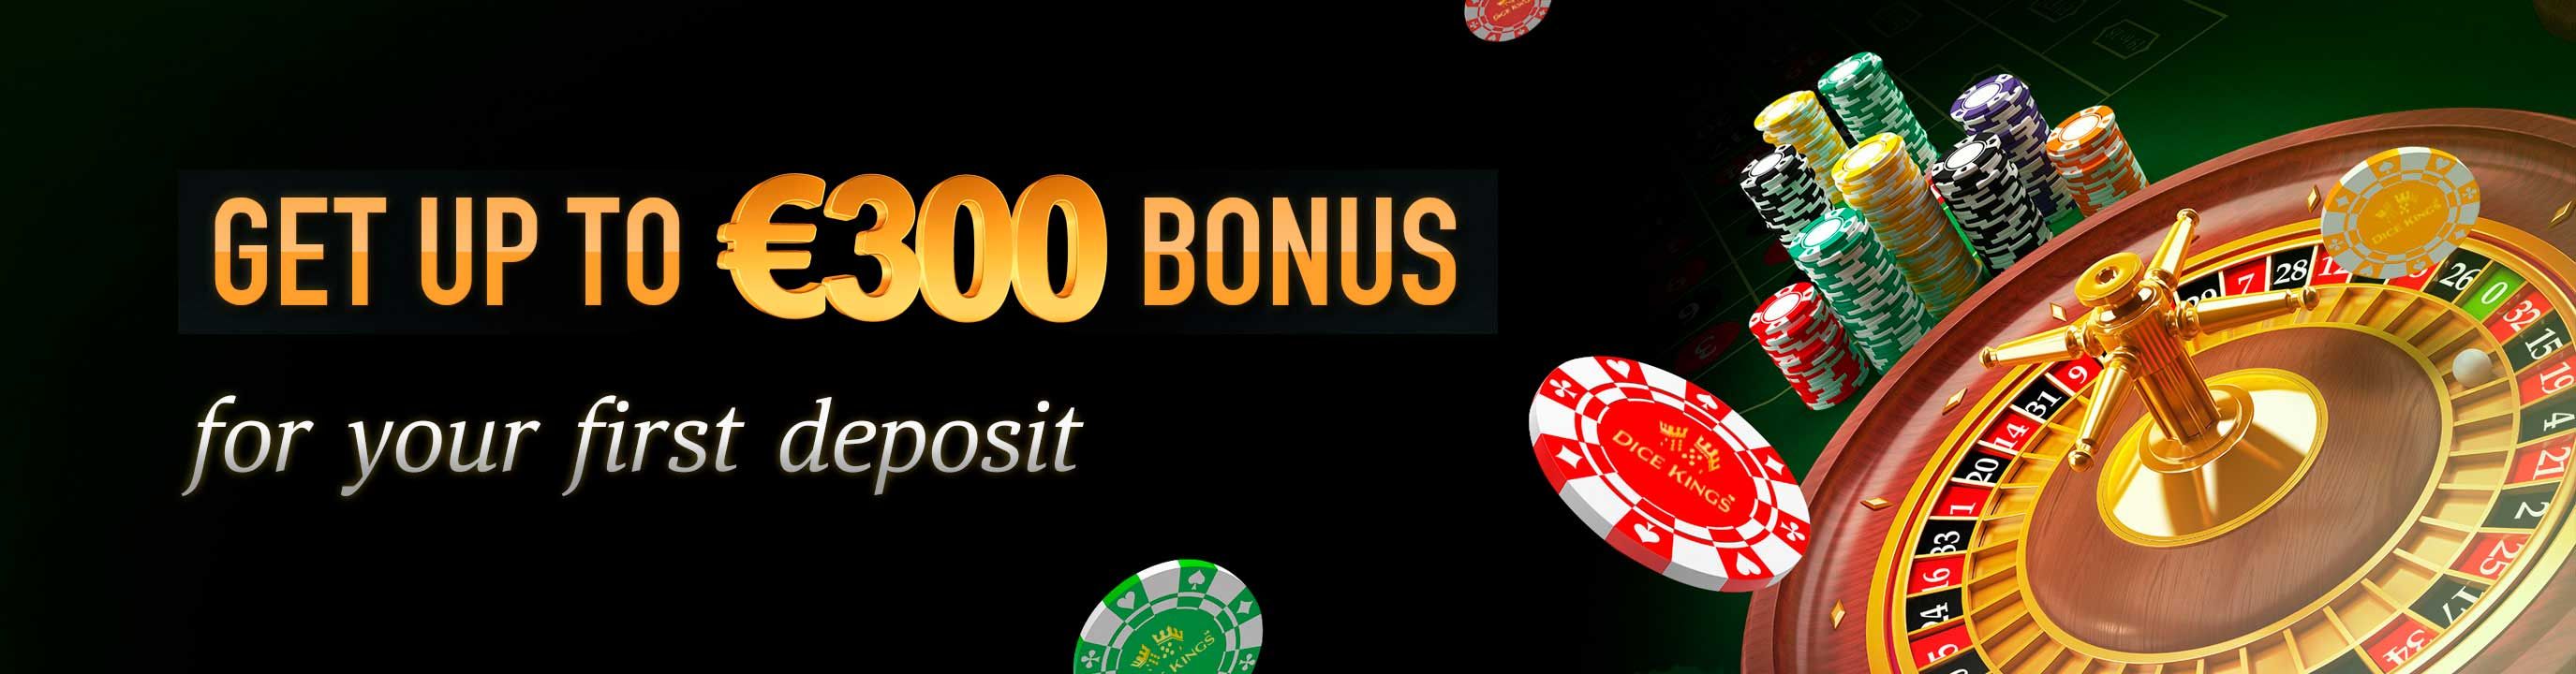 Online Bitcoin Casino With Free Bonus Profile - Casino Slots Free Signup Bonus